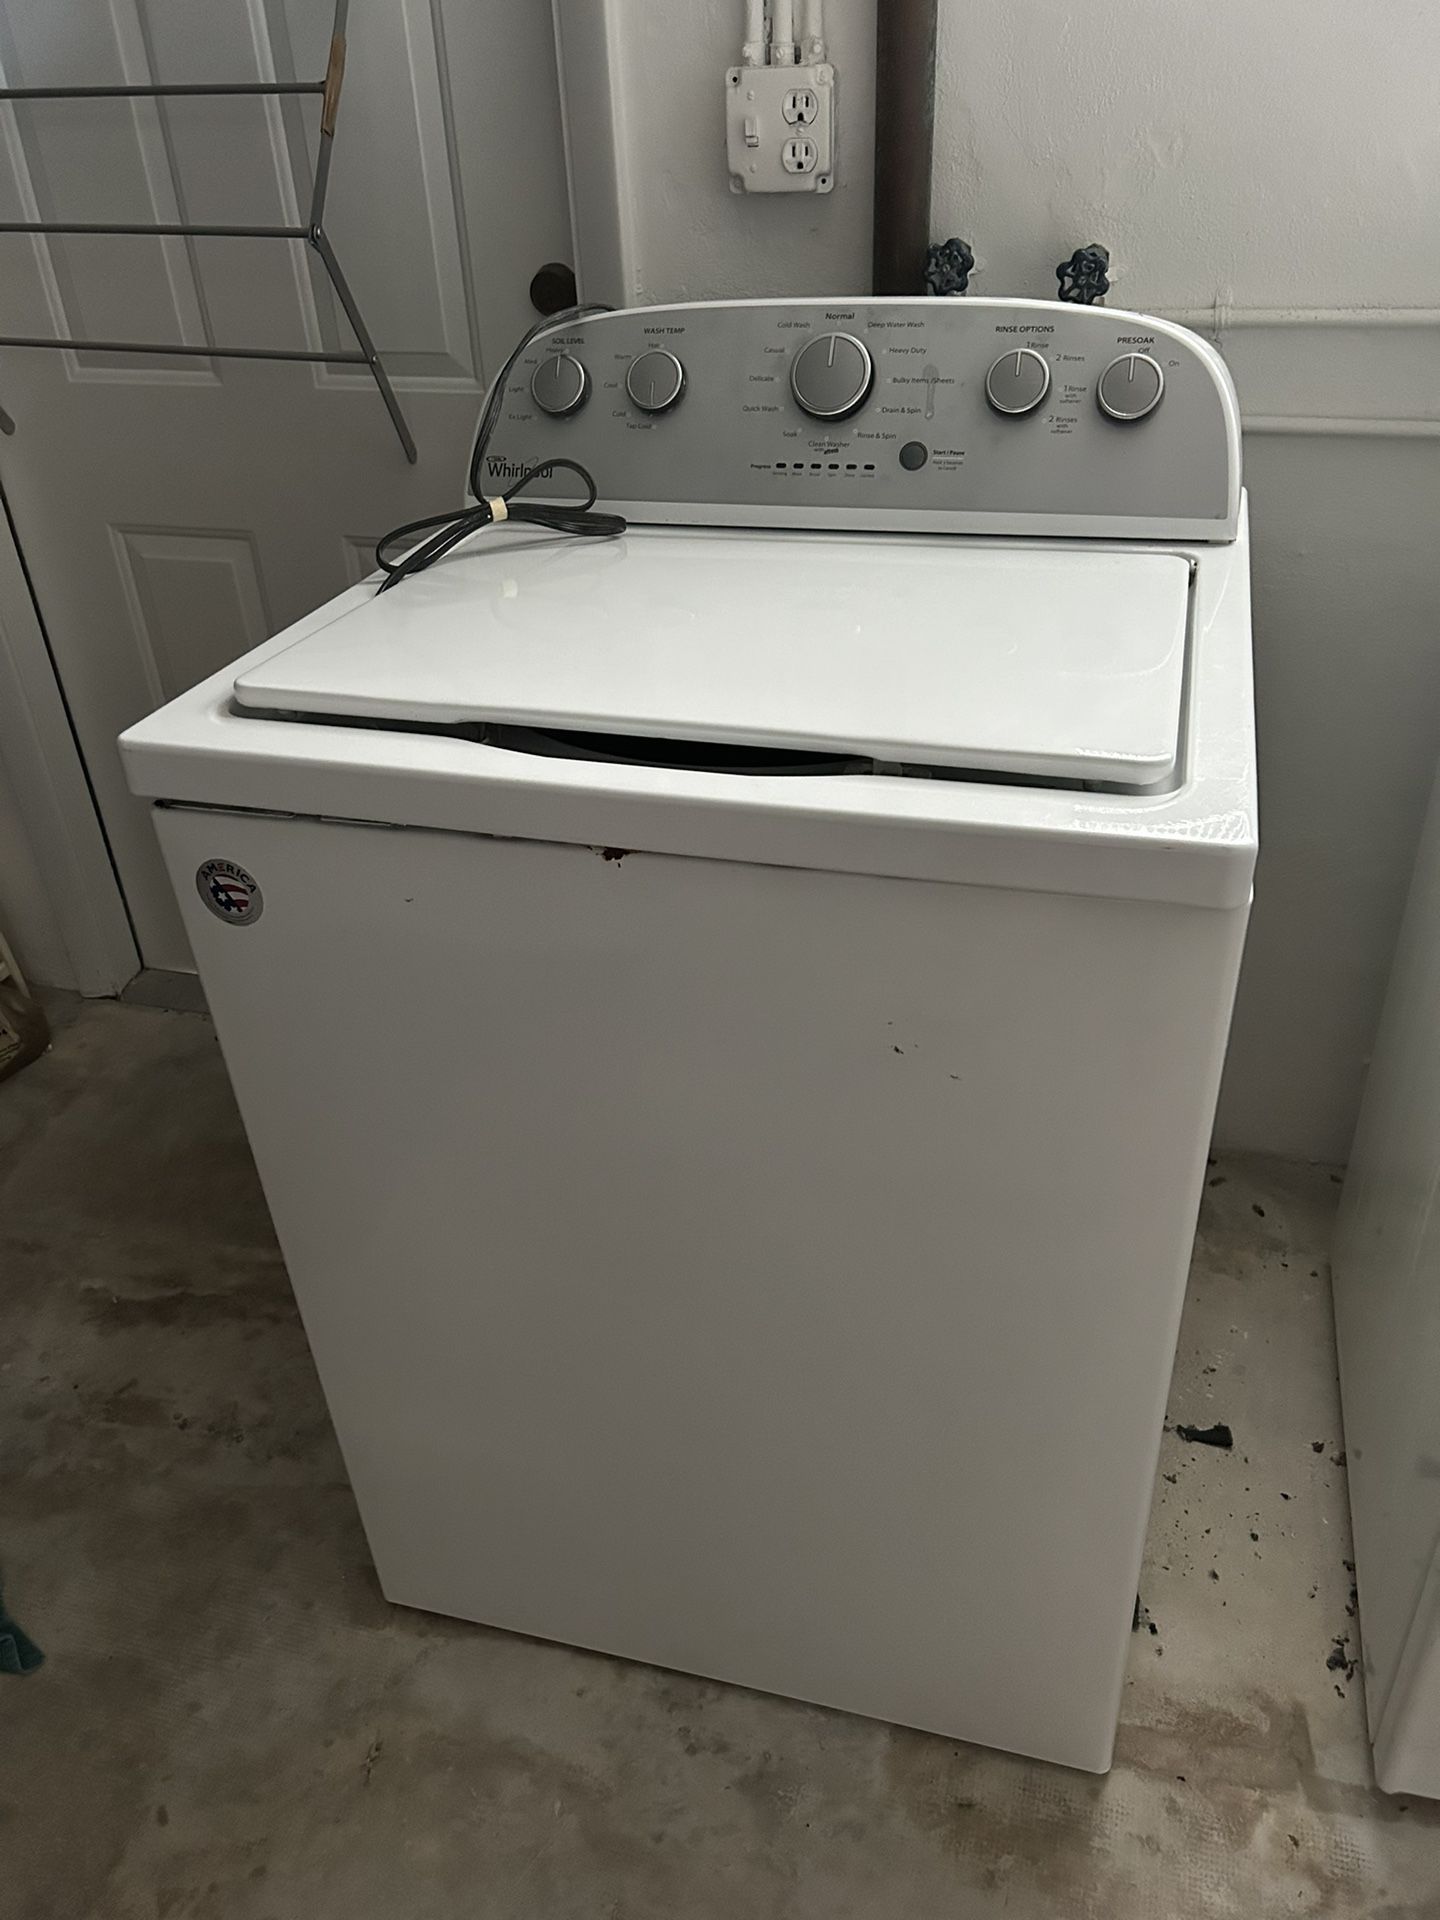  Whirlpool washing machine, model #WTW5000DW1